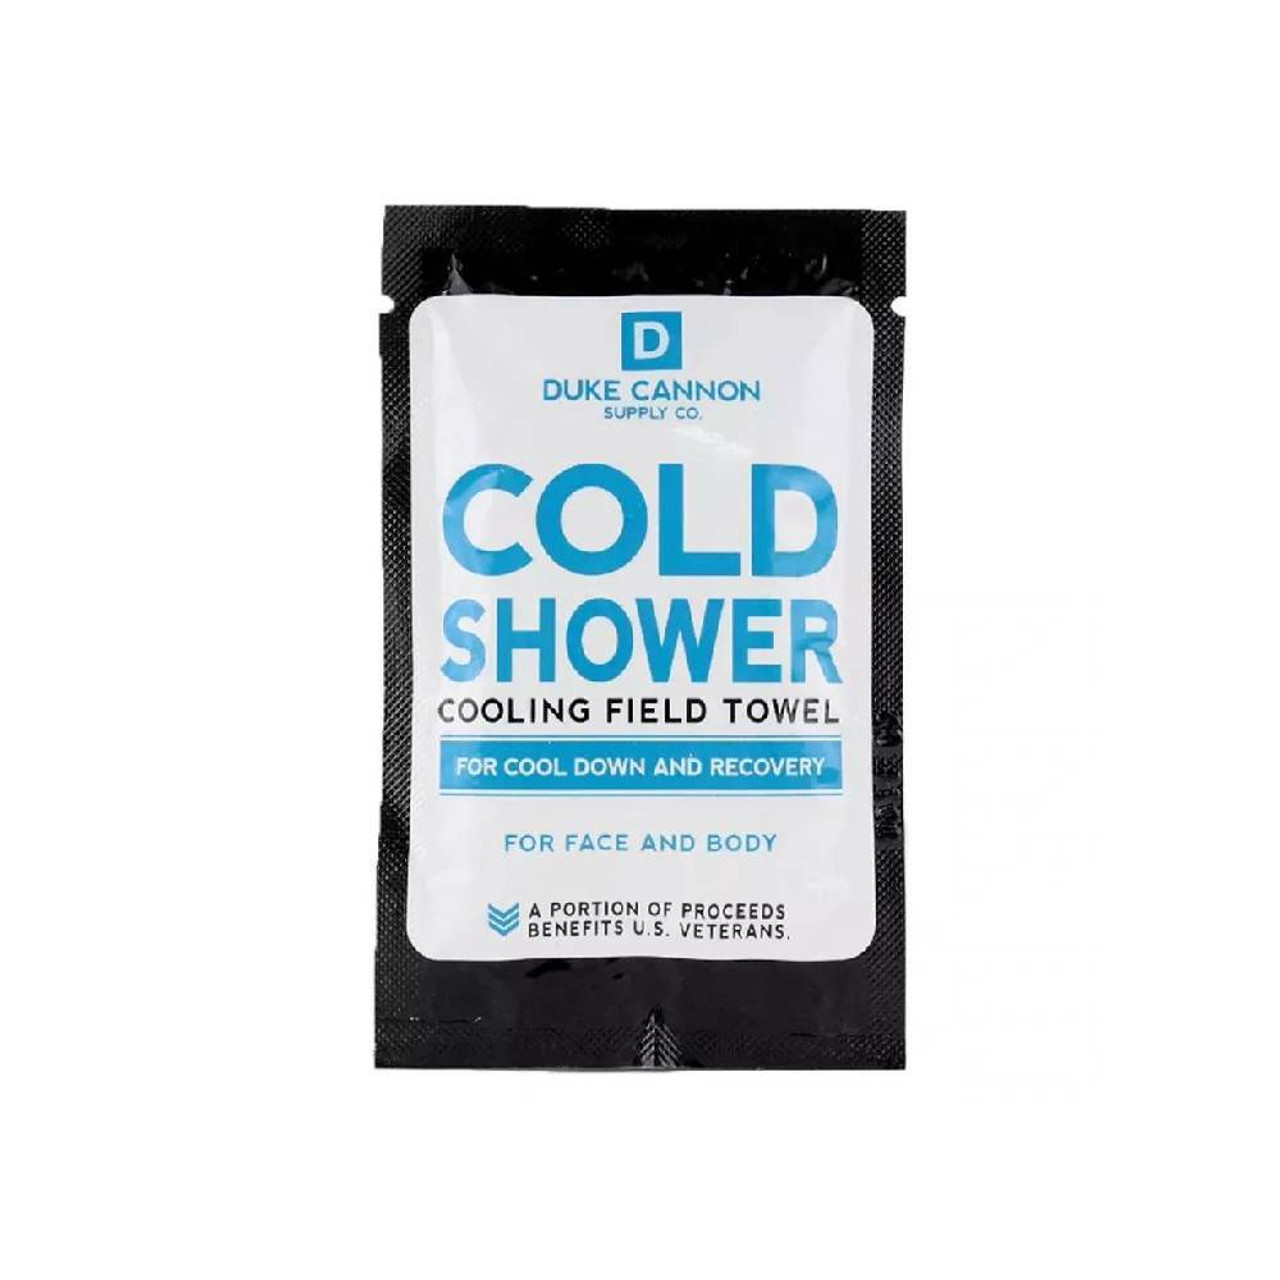 https://cdn11.bigcommerce.com/s-kk2jd0cxqh/images/stencil/1280x1280/products/16746/10200/duke-cannon-cold-shower-cooling-field-towel-single__66149.1654808934.jpg?c=1